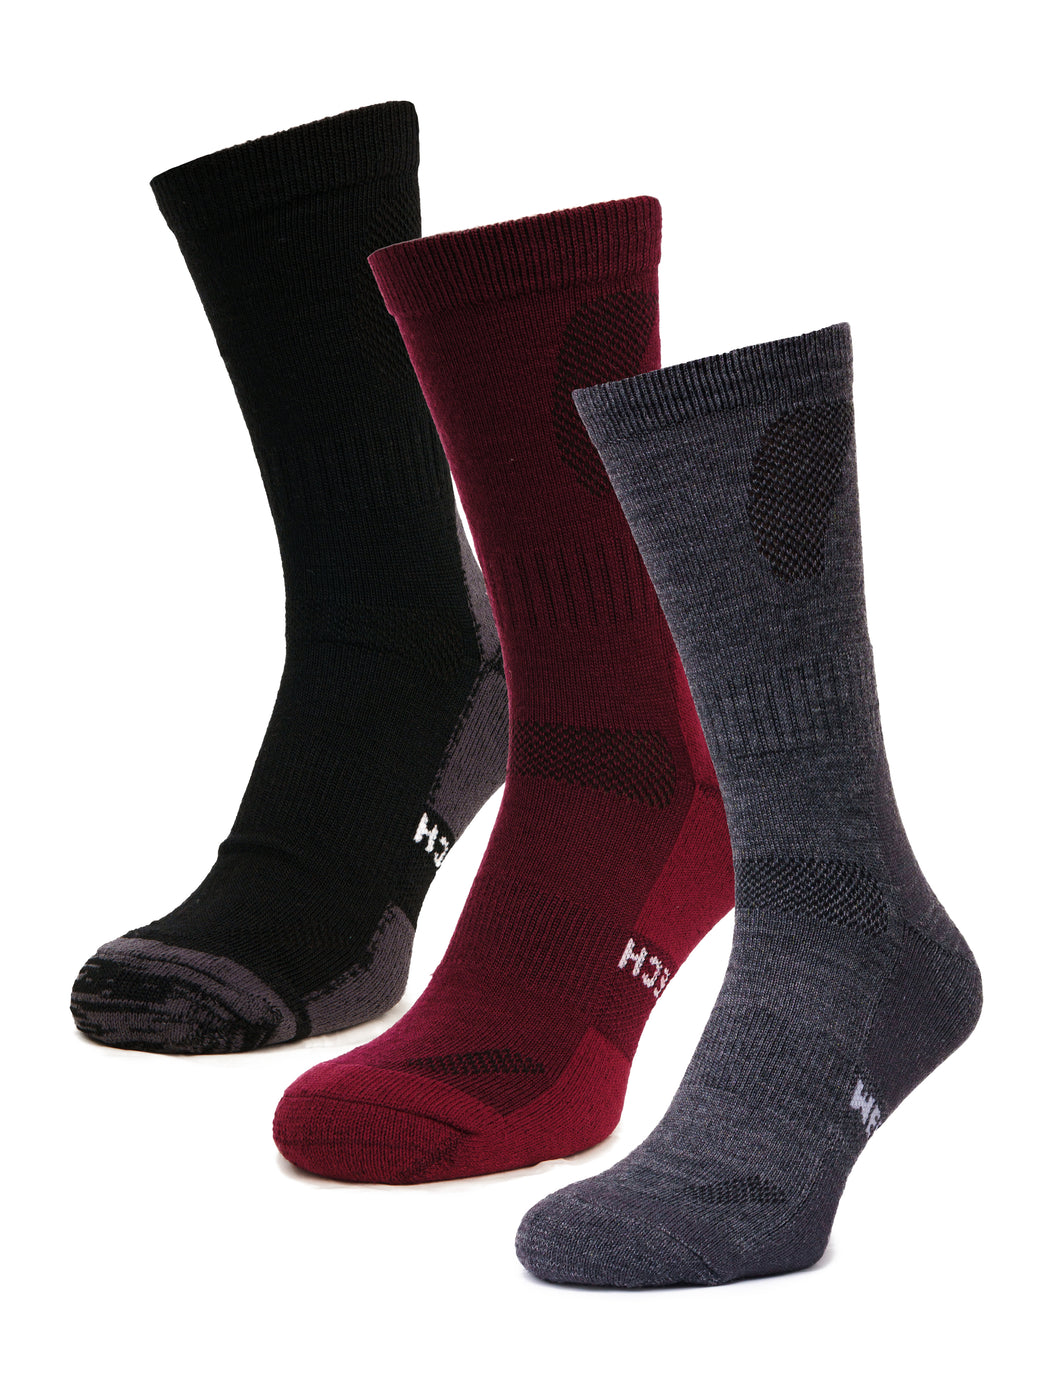 Merino Wool Hiking Socks - Multicolor: Black, Red, Charcoal